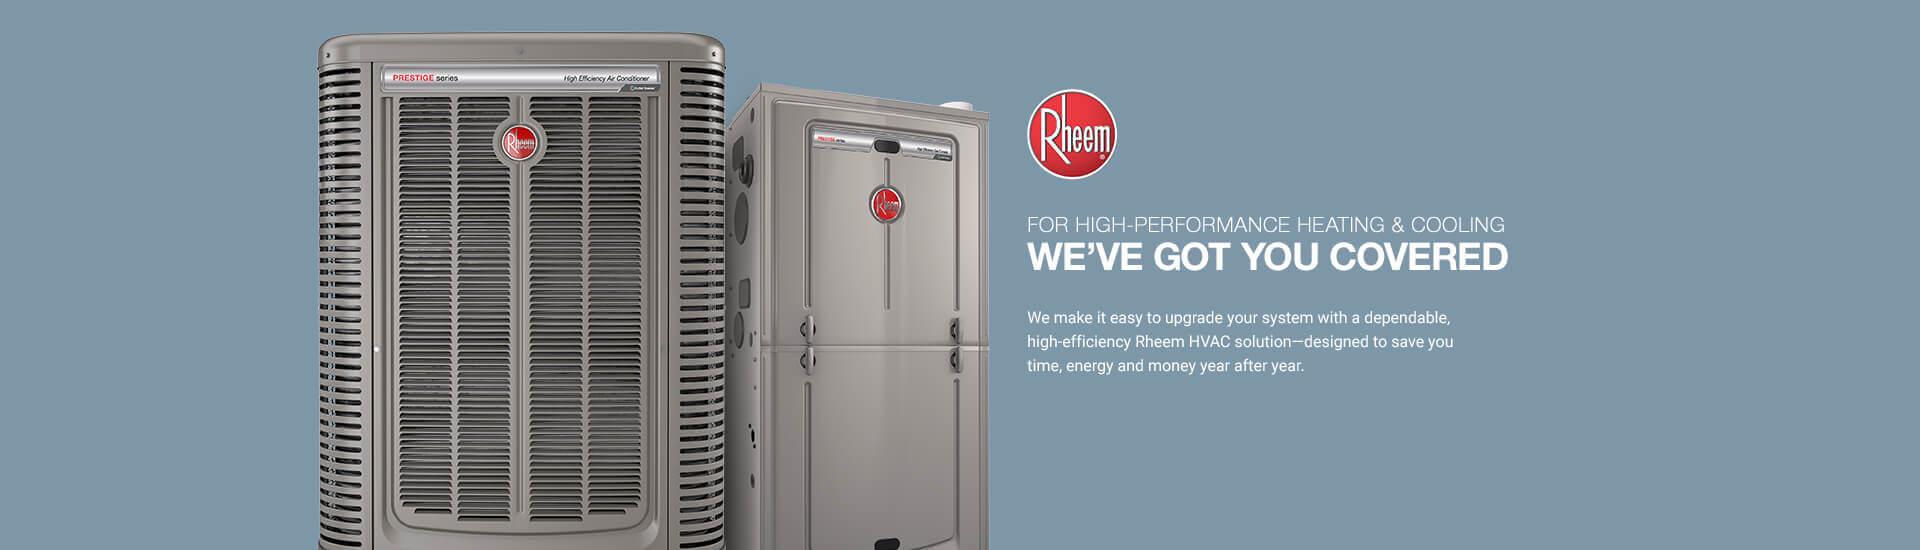 Rheem Air Conditioning Specials